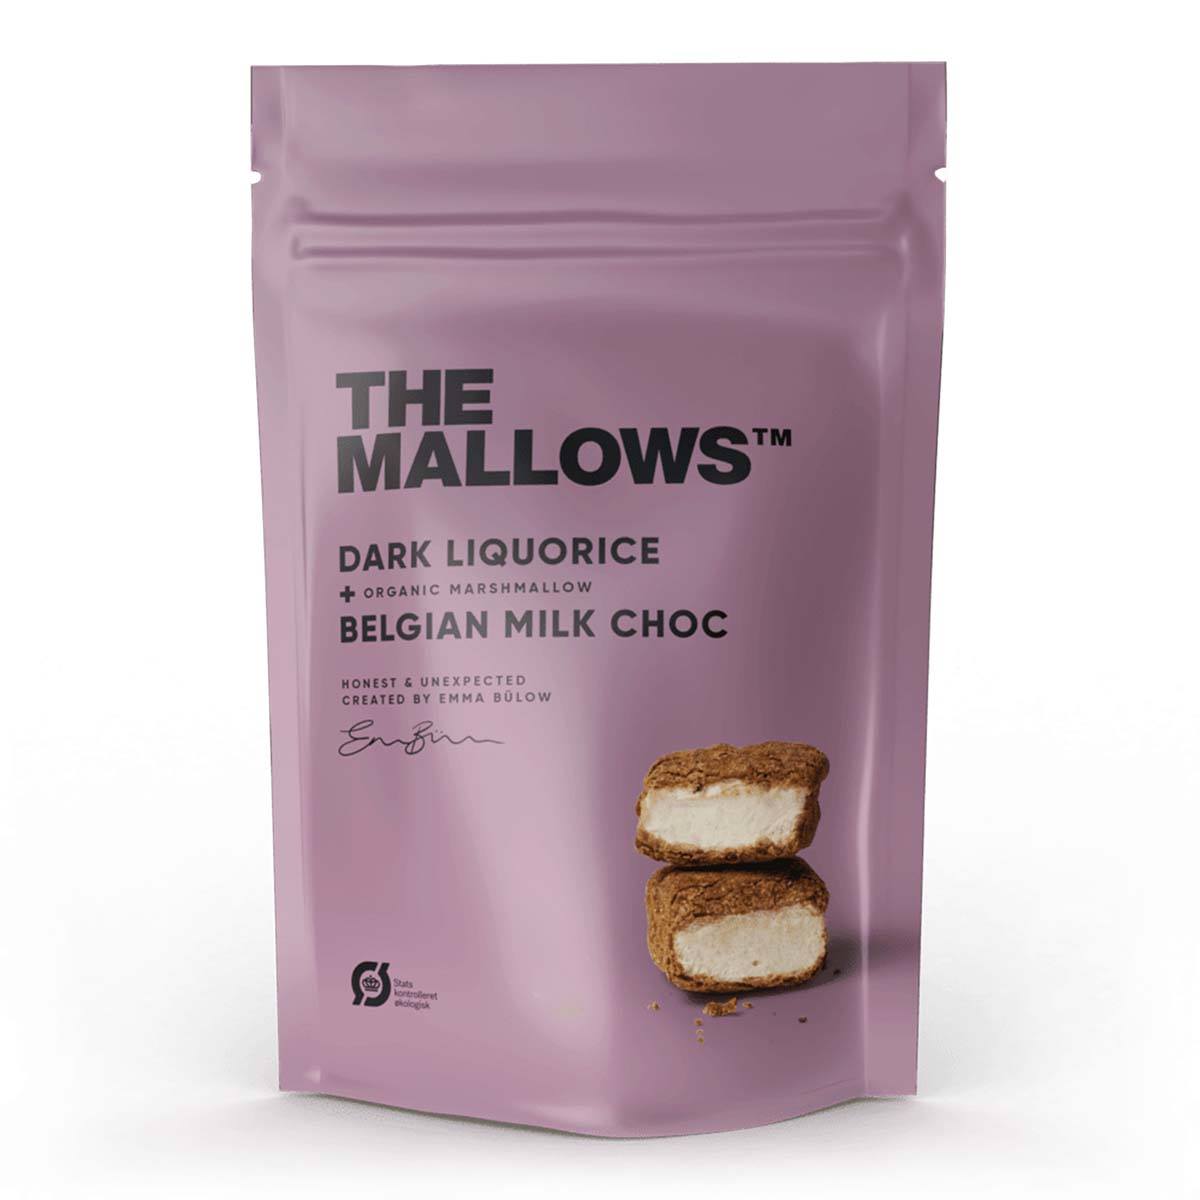 Dark Liquorice - Organic Marshmallow Coated With Liquorice & Belgian Milk Chocolate